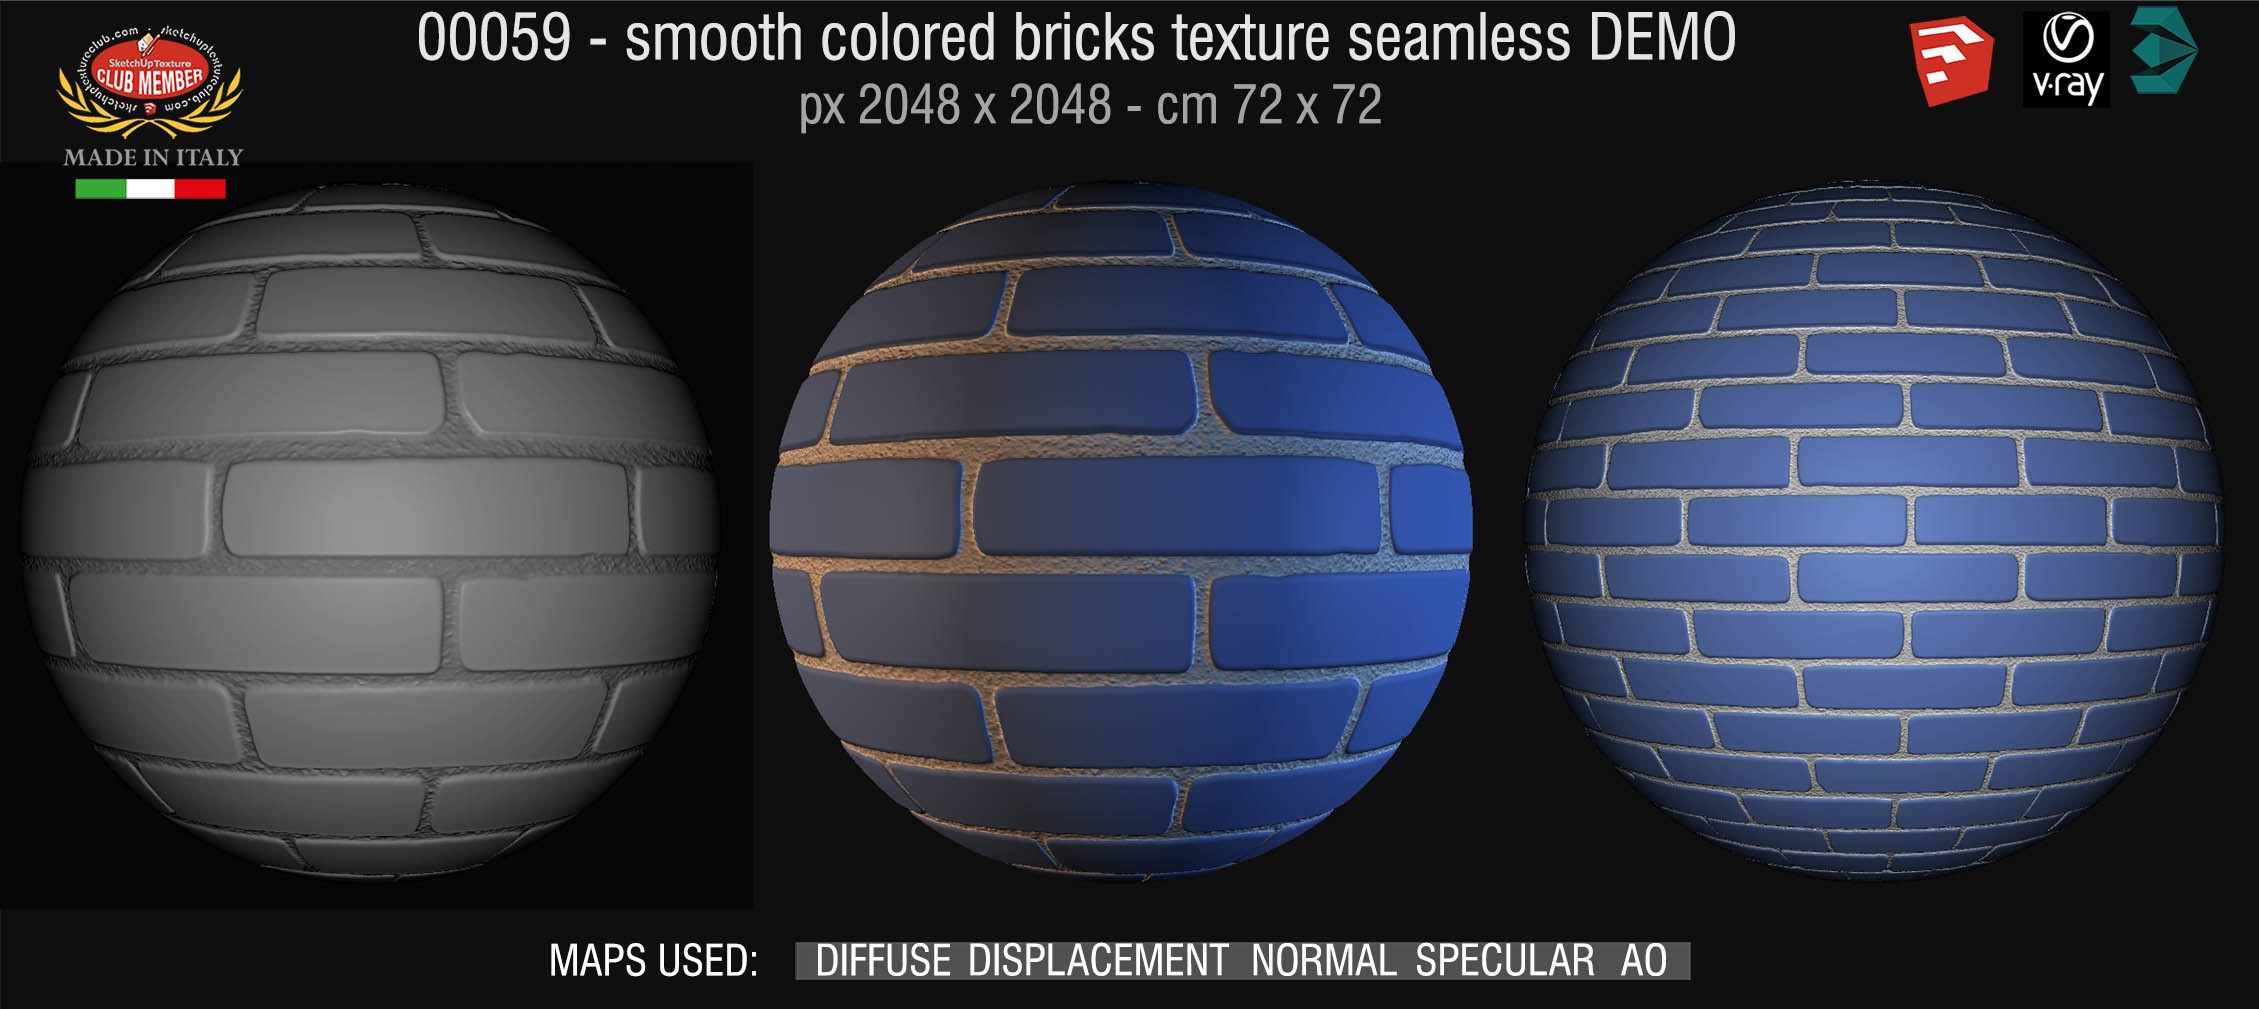 00059 smooth colored bricks texture seamless + maps DEMO